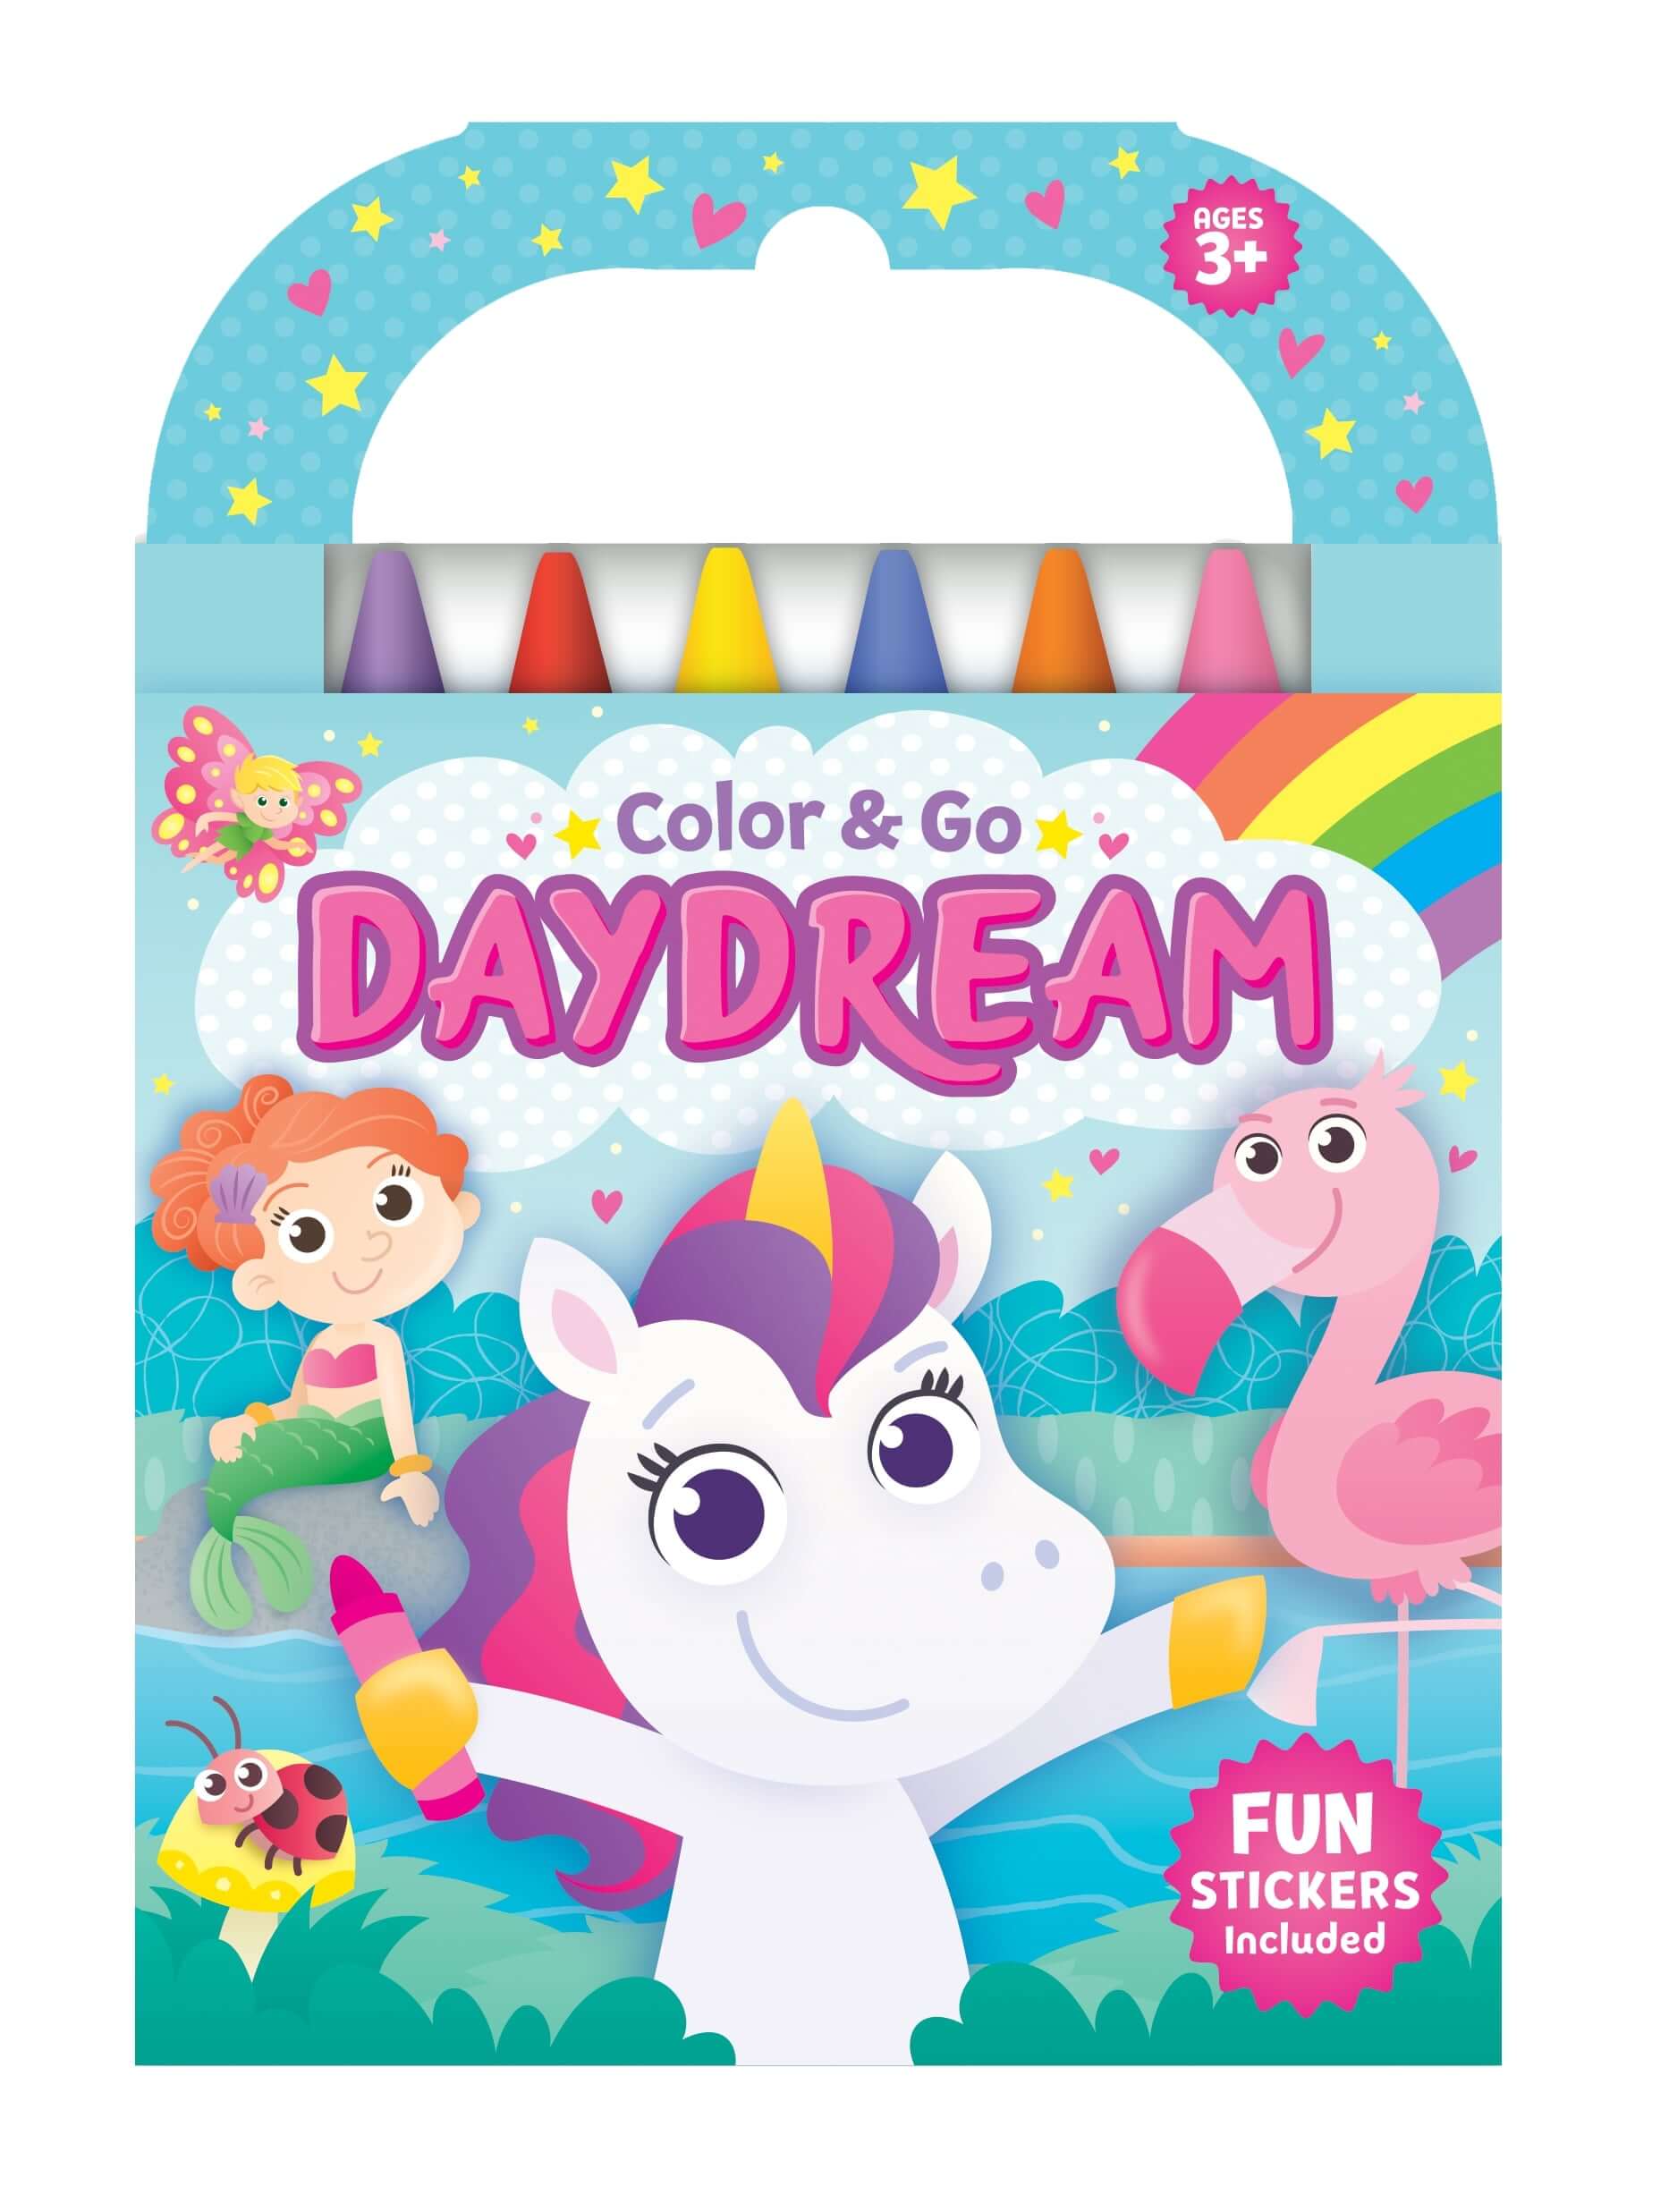 Color & Go: Daydream